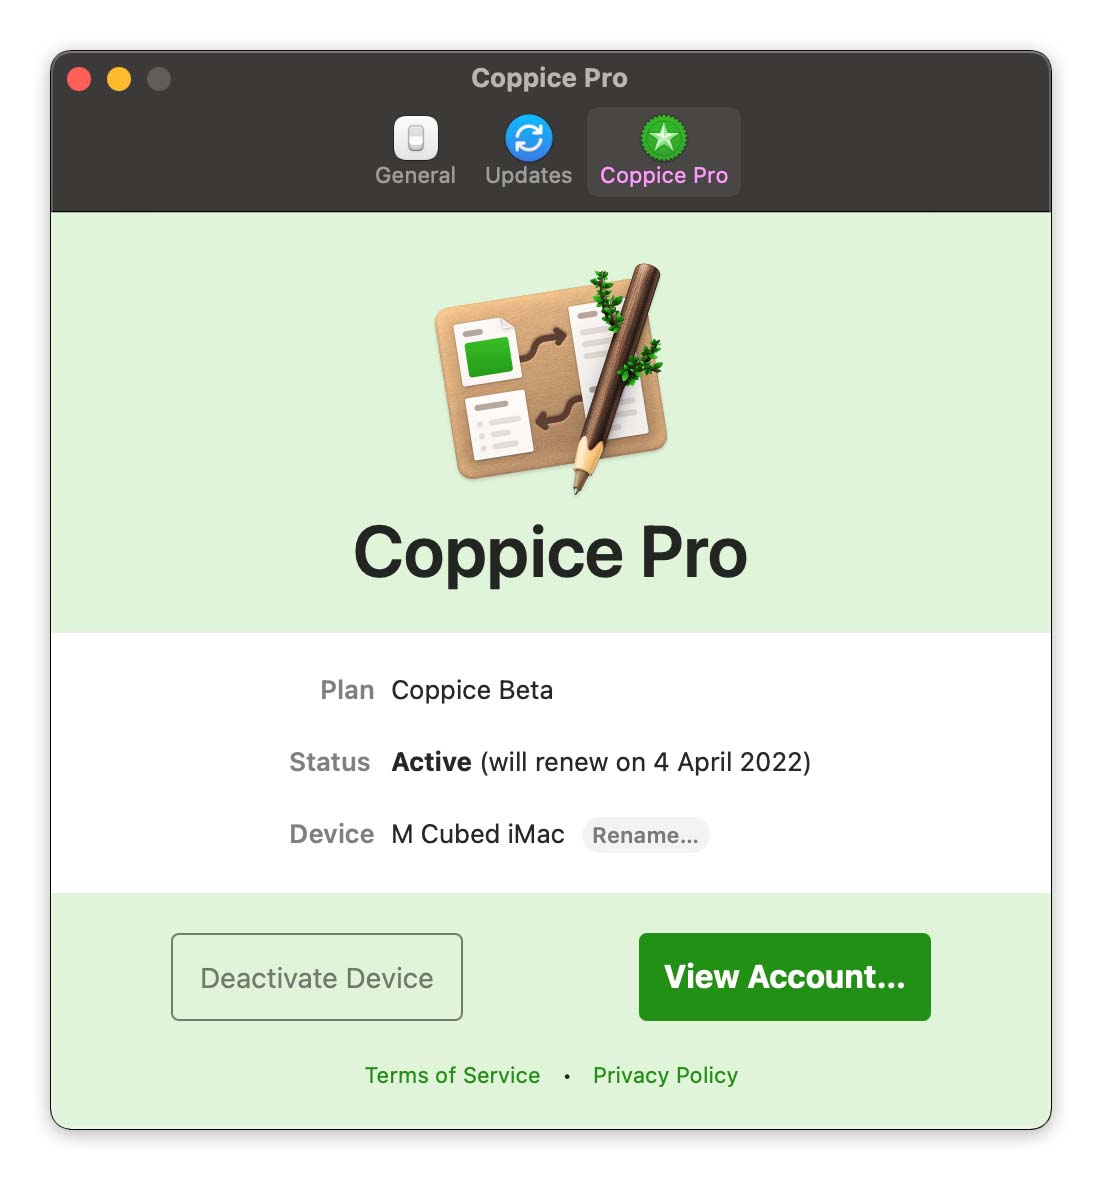 The new Coppice Pro info screen